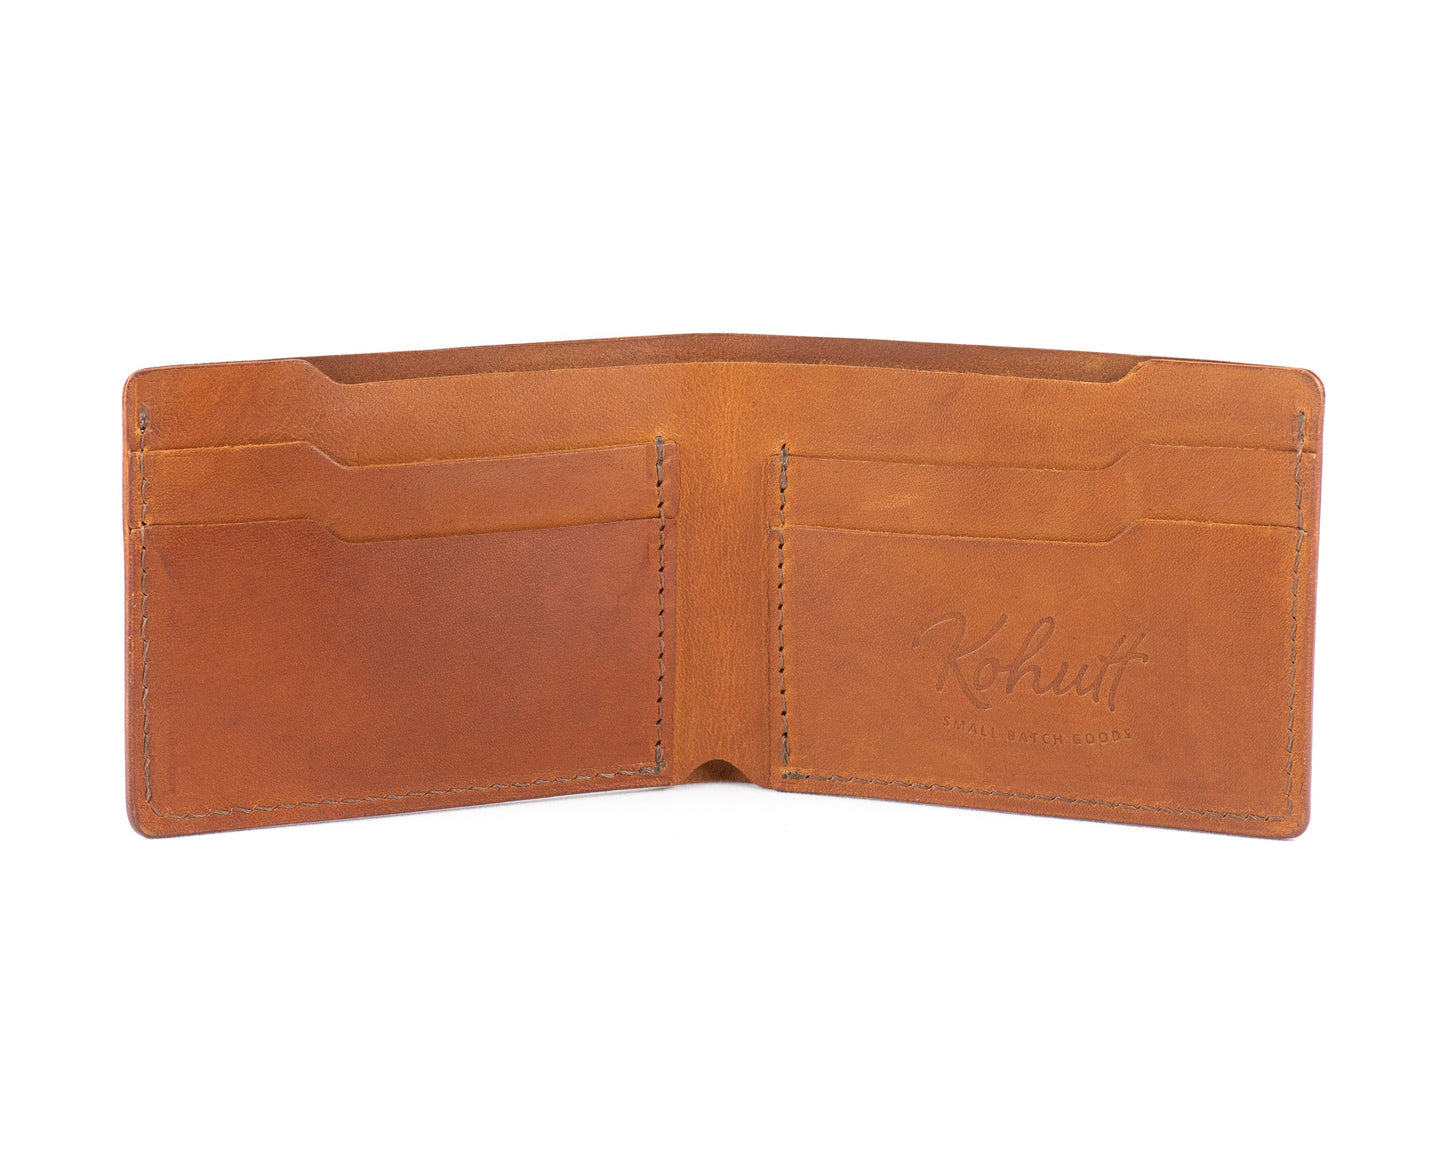 Classic bifold slim wallet in caramel Kangaroo leather - Kohutt™ - made in Tasmania